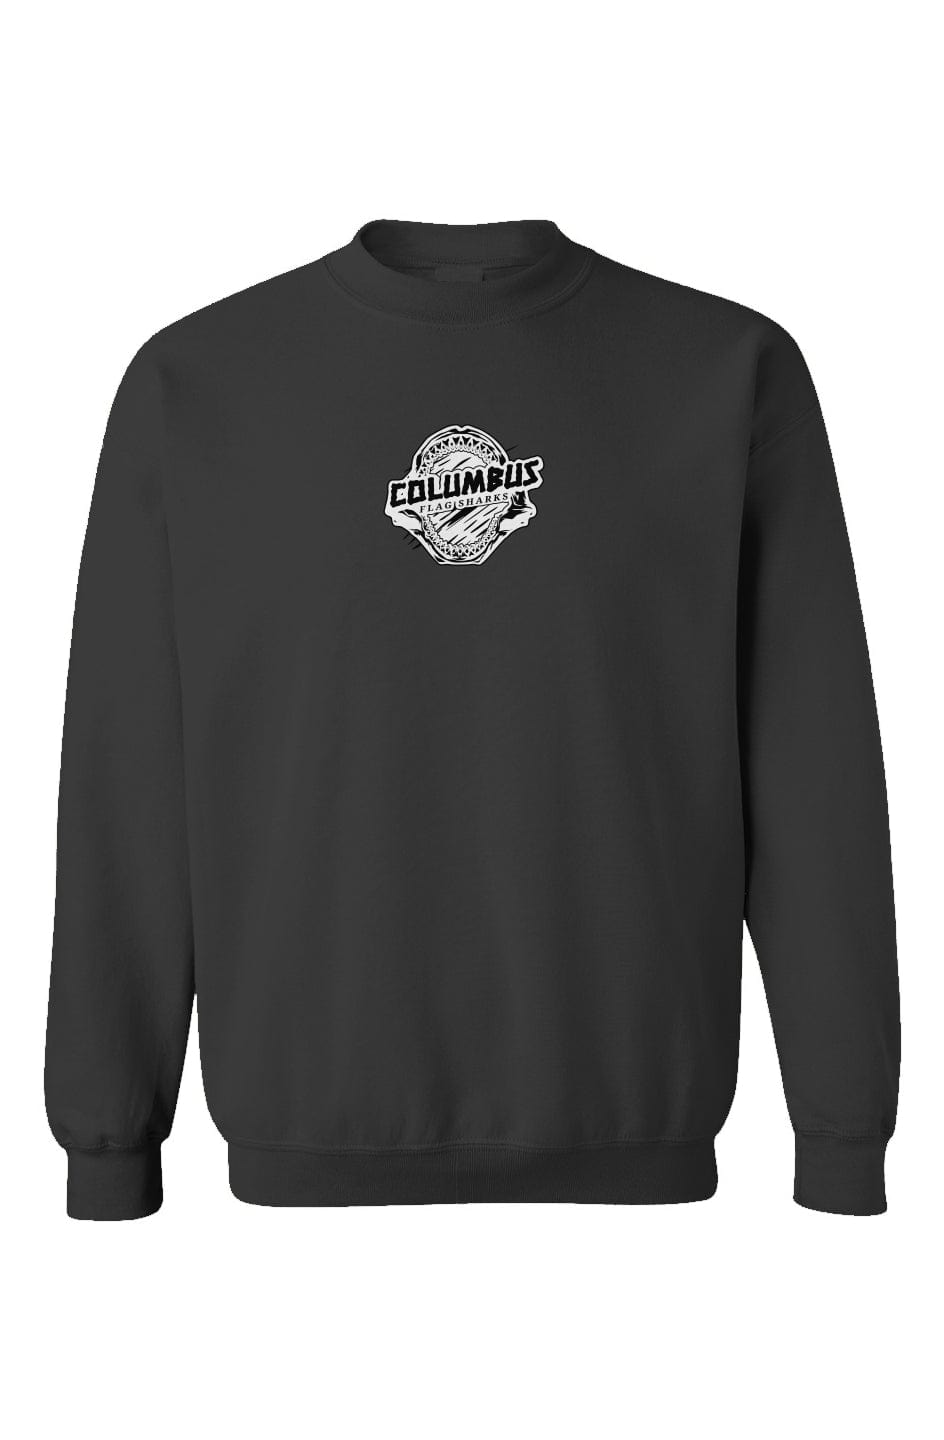 Columbus Flag Sharks Premium Youth Sweatshirt Signature Lacrosse